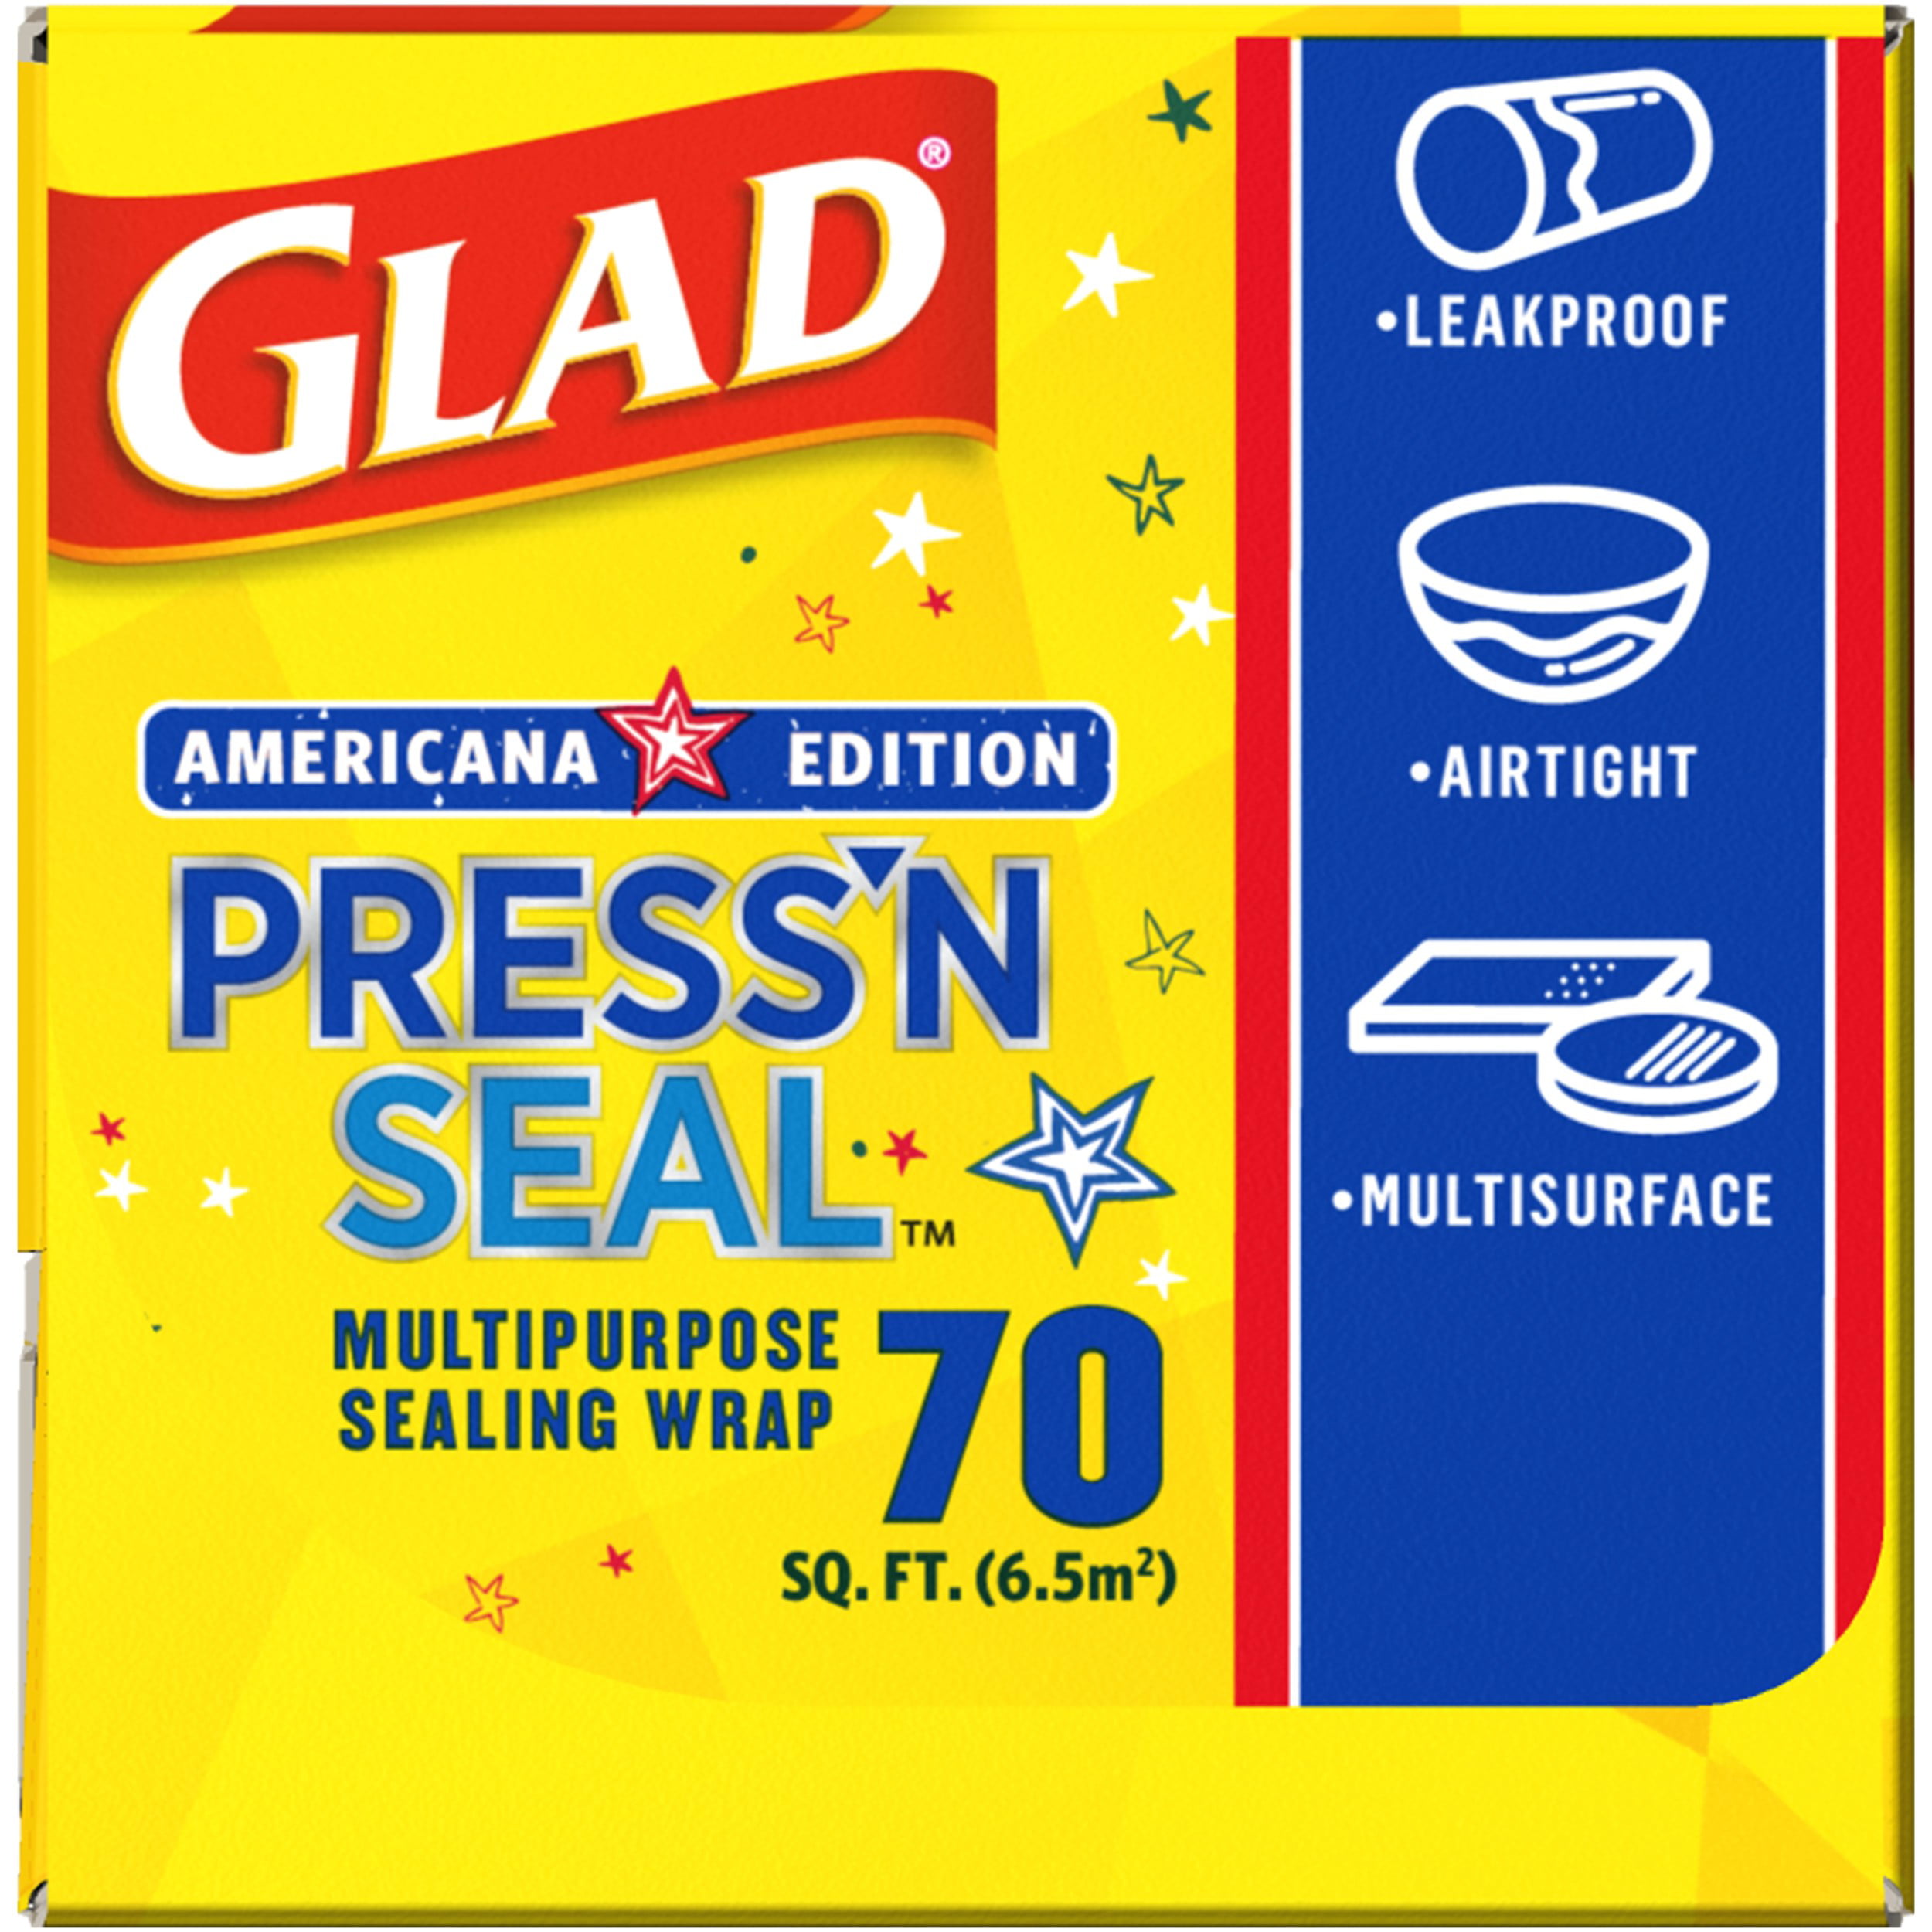 Glad Press'n Seal Food Plastic Wrap, 70 Square Foot Roll, 12/Carton